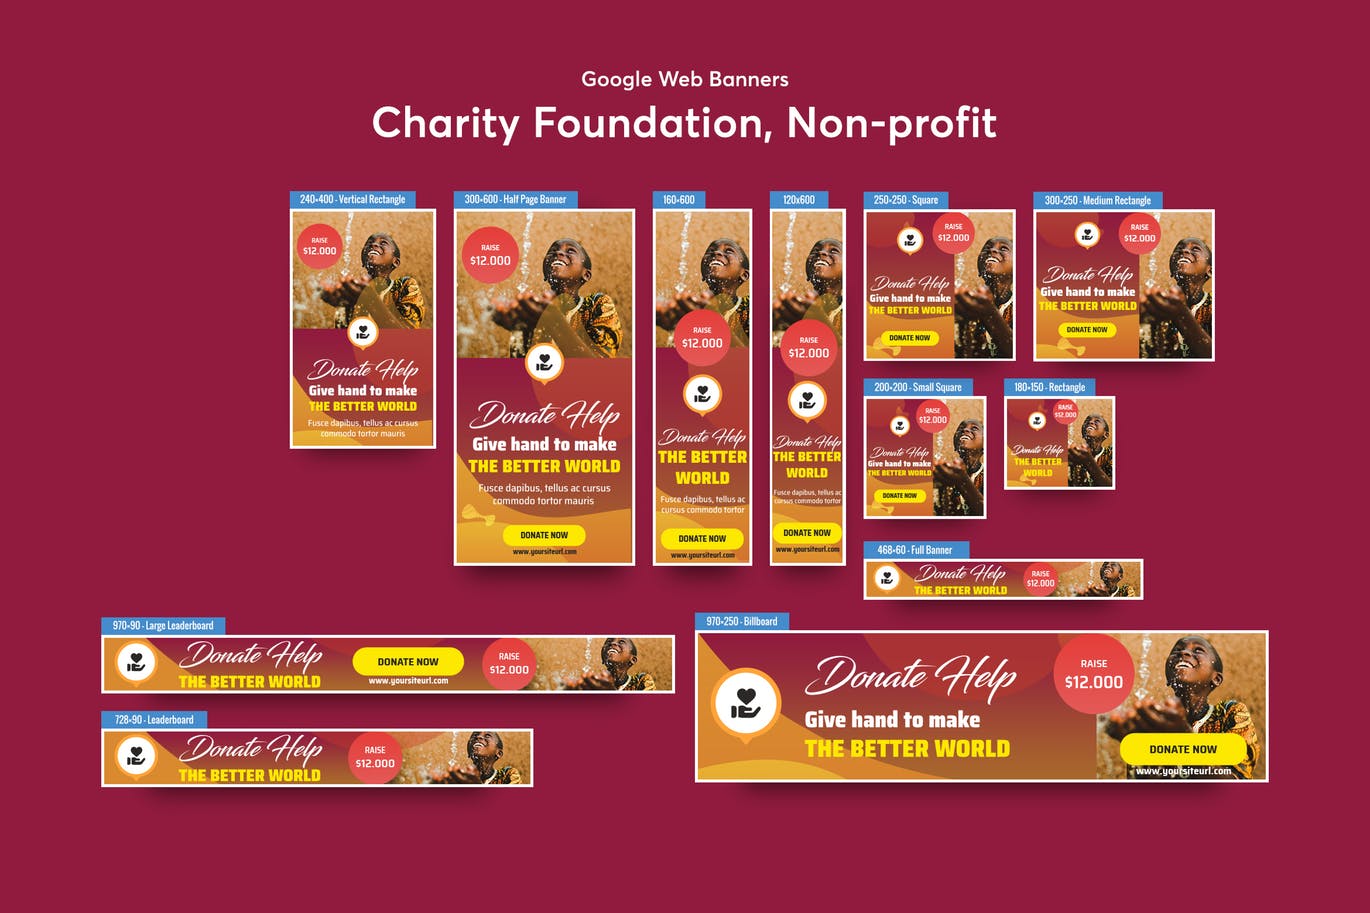 慈善基金会非营利组织推广Banner大洋岛精选广告模板 Charity Foundation, Non-profit Banners Ad插图